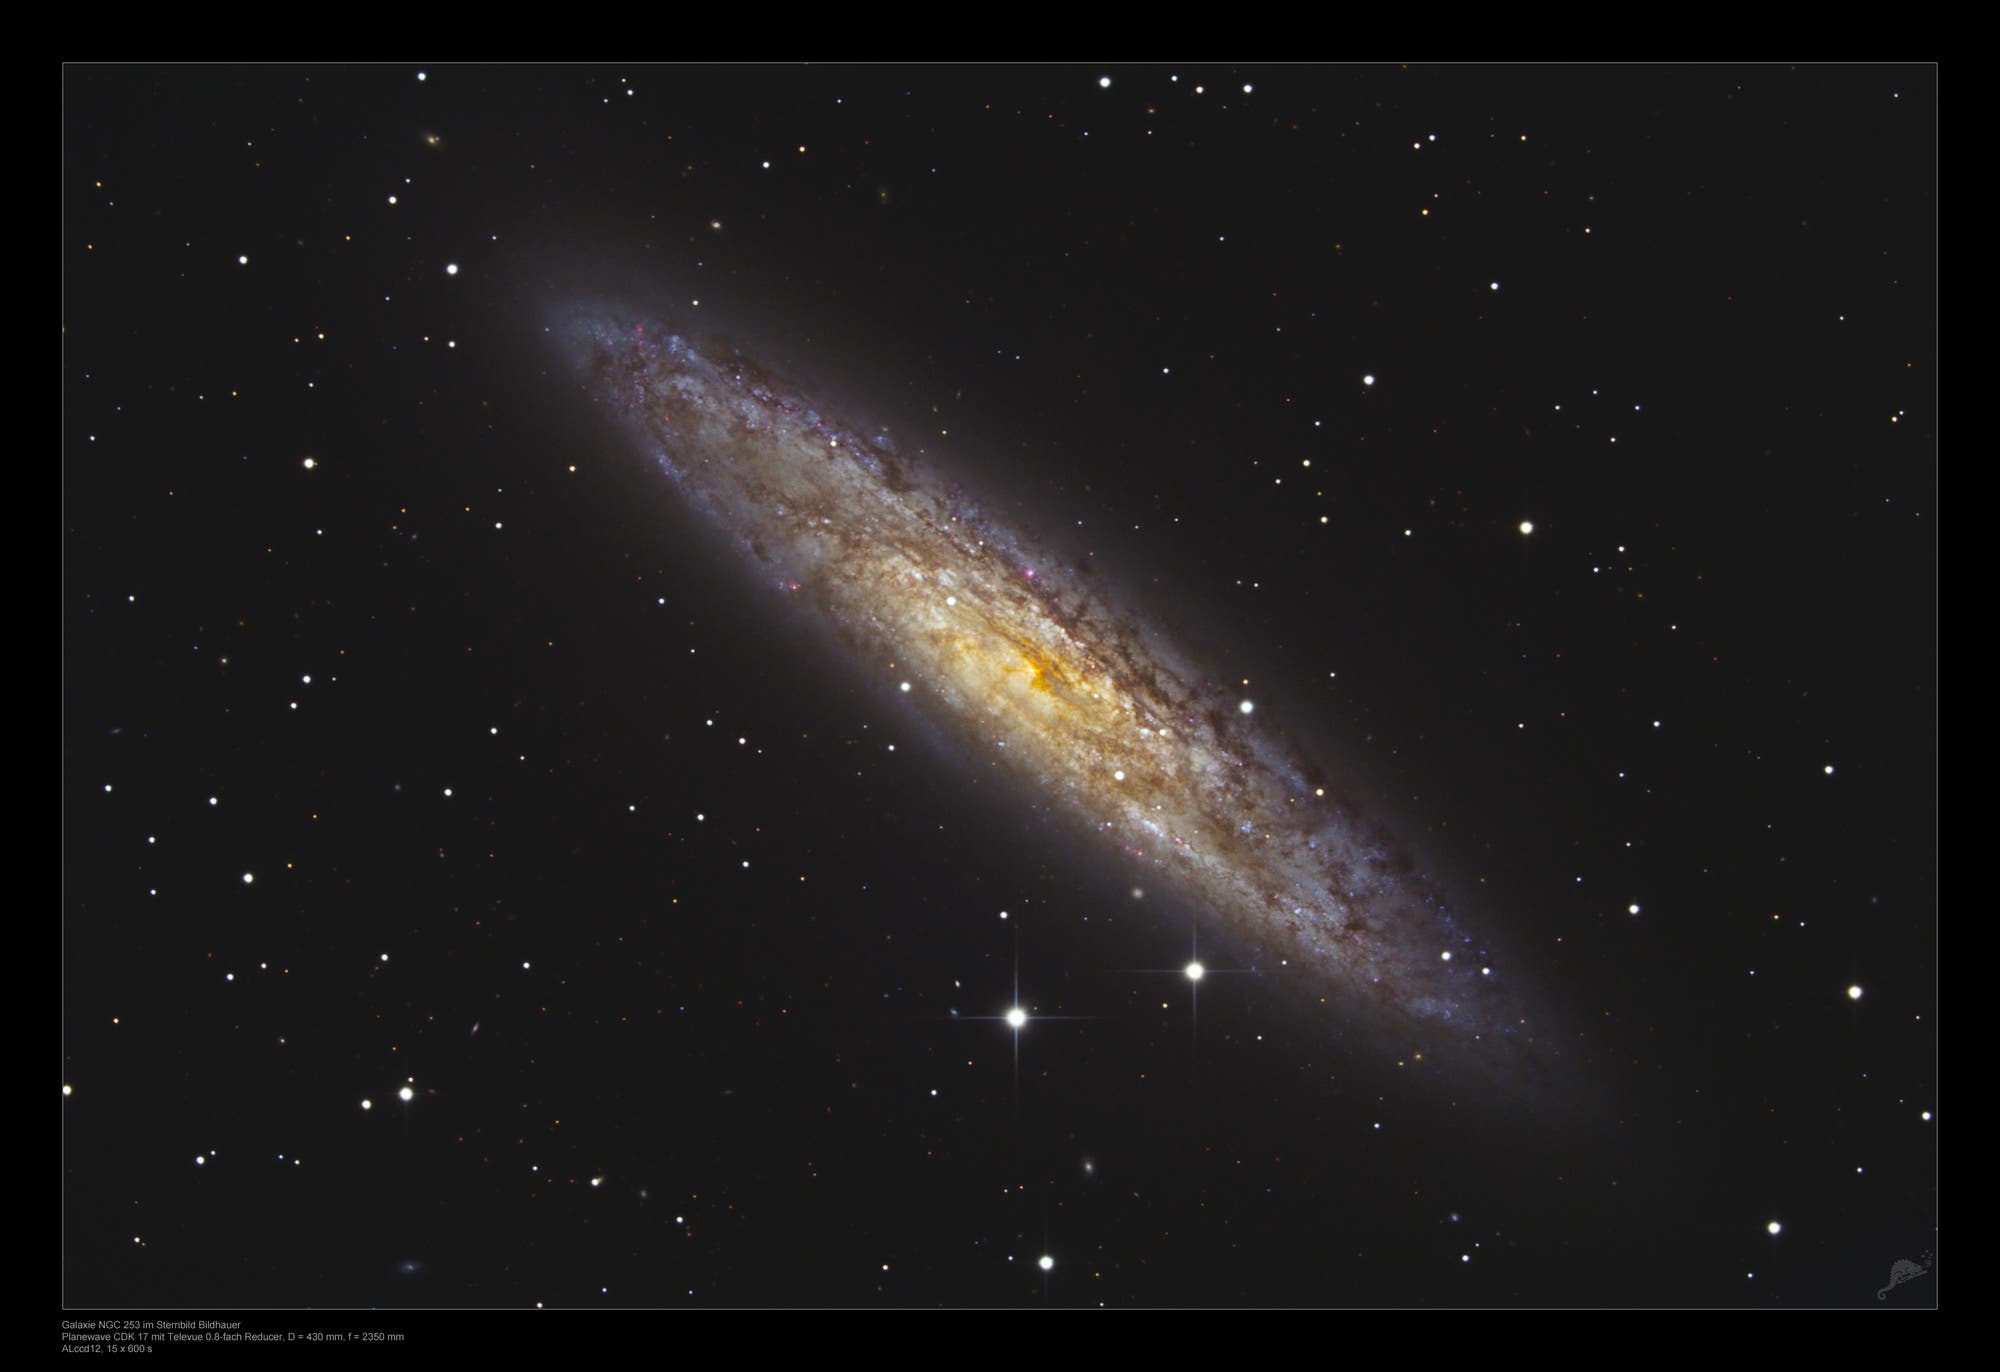 Sculptor-Galaxie NGC 253